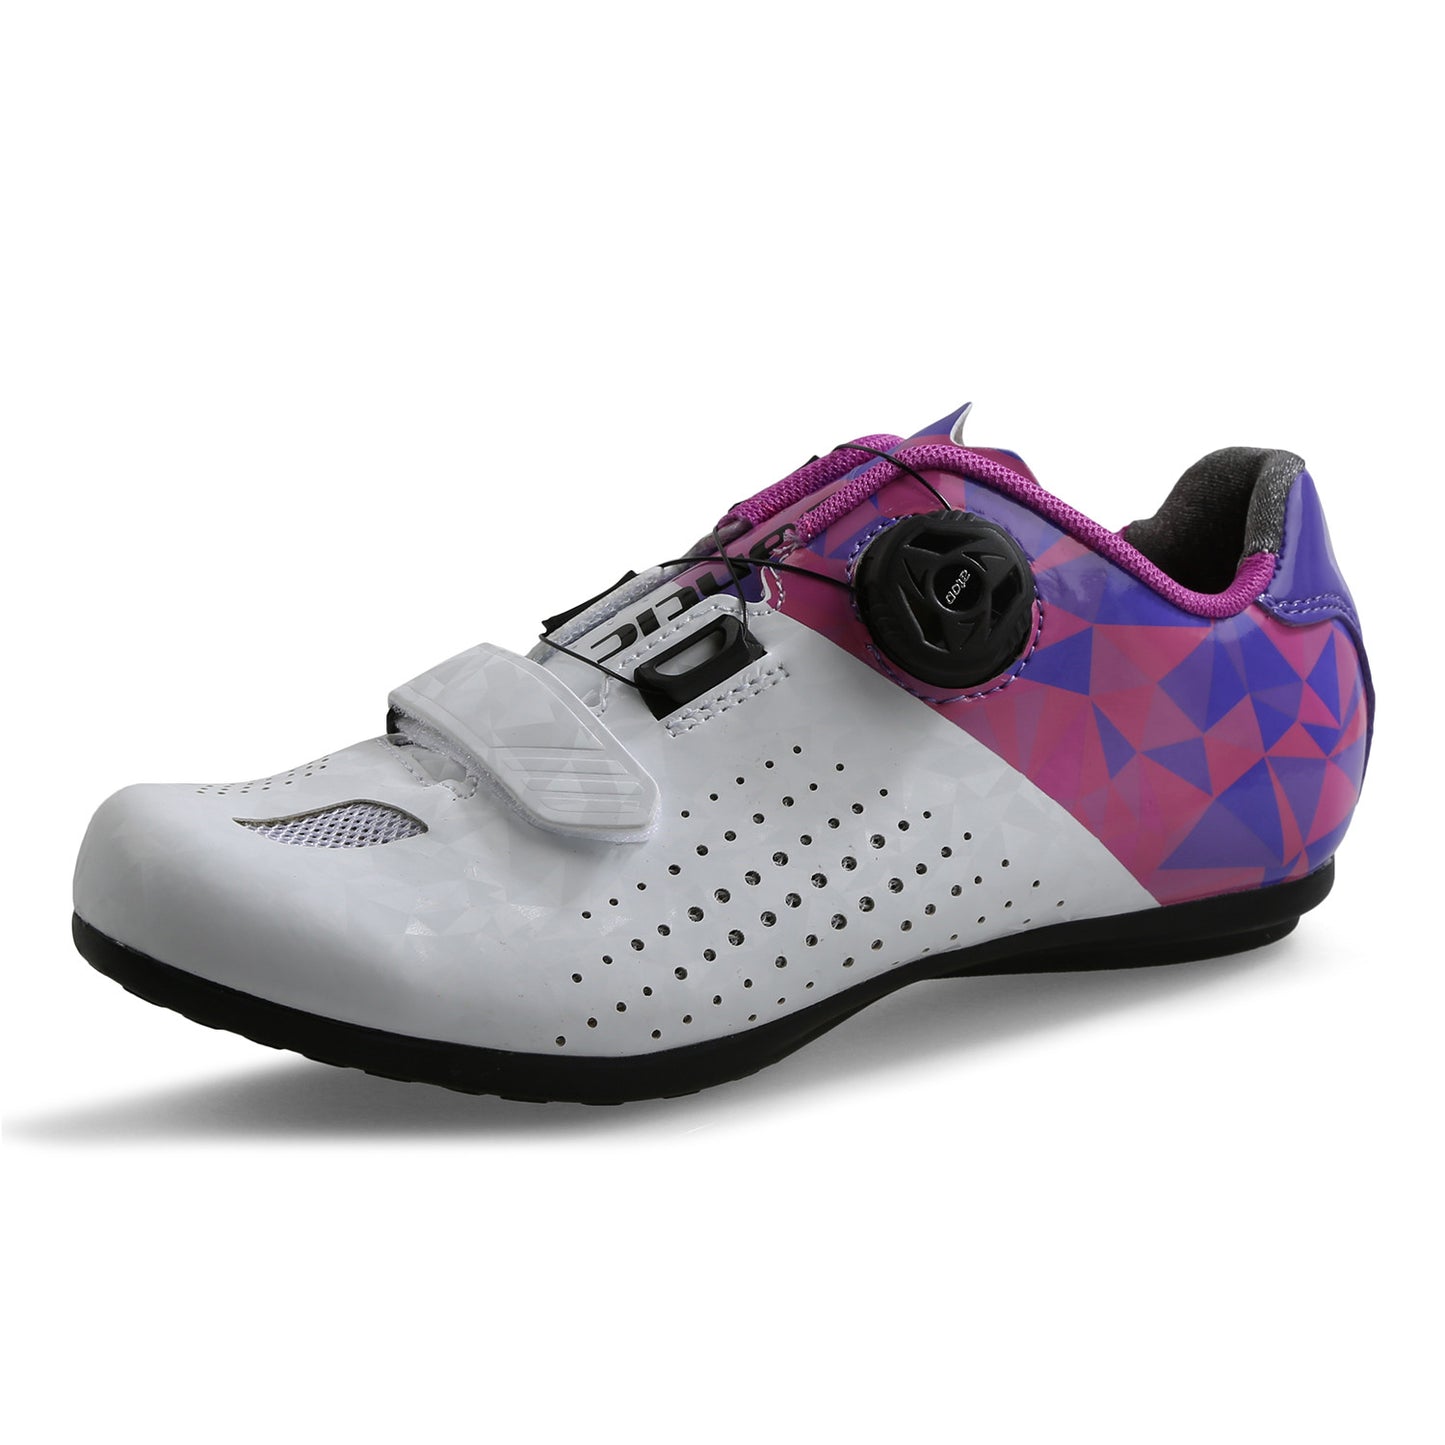 Santic Athena Purple Women Road MTB Cycling Shoes Bike Cleats not Compatible